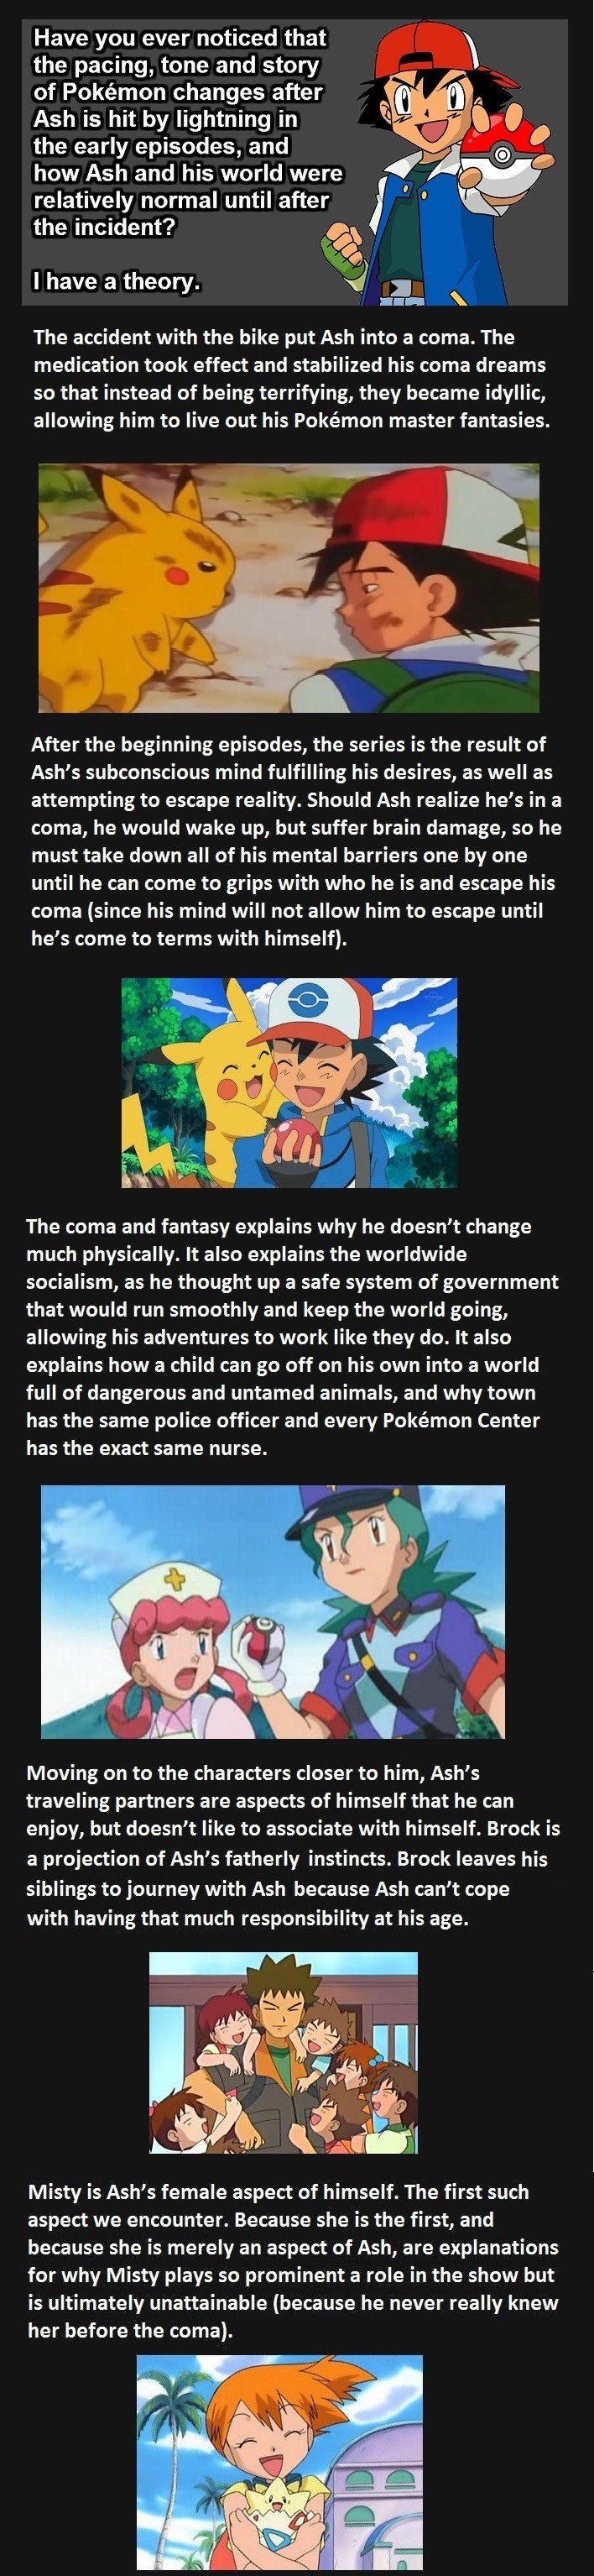 Ashs Coma  Pokemon Fan Theory